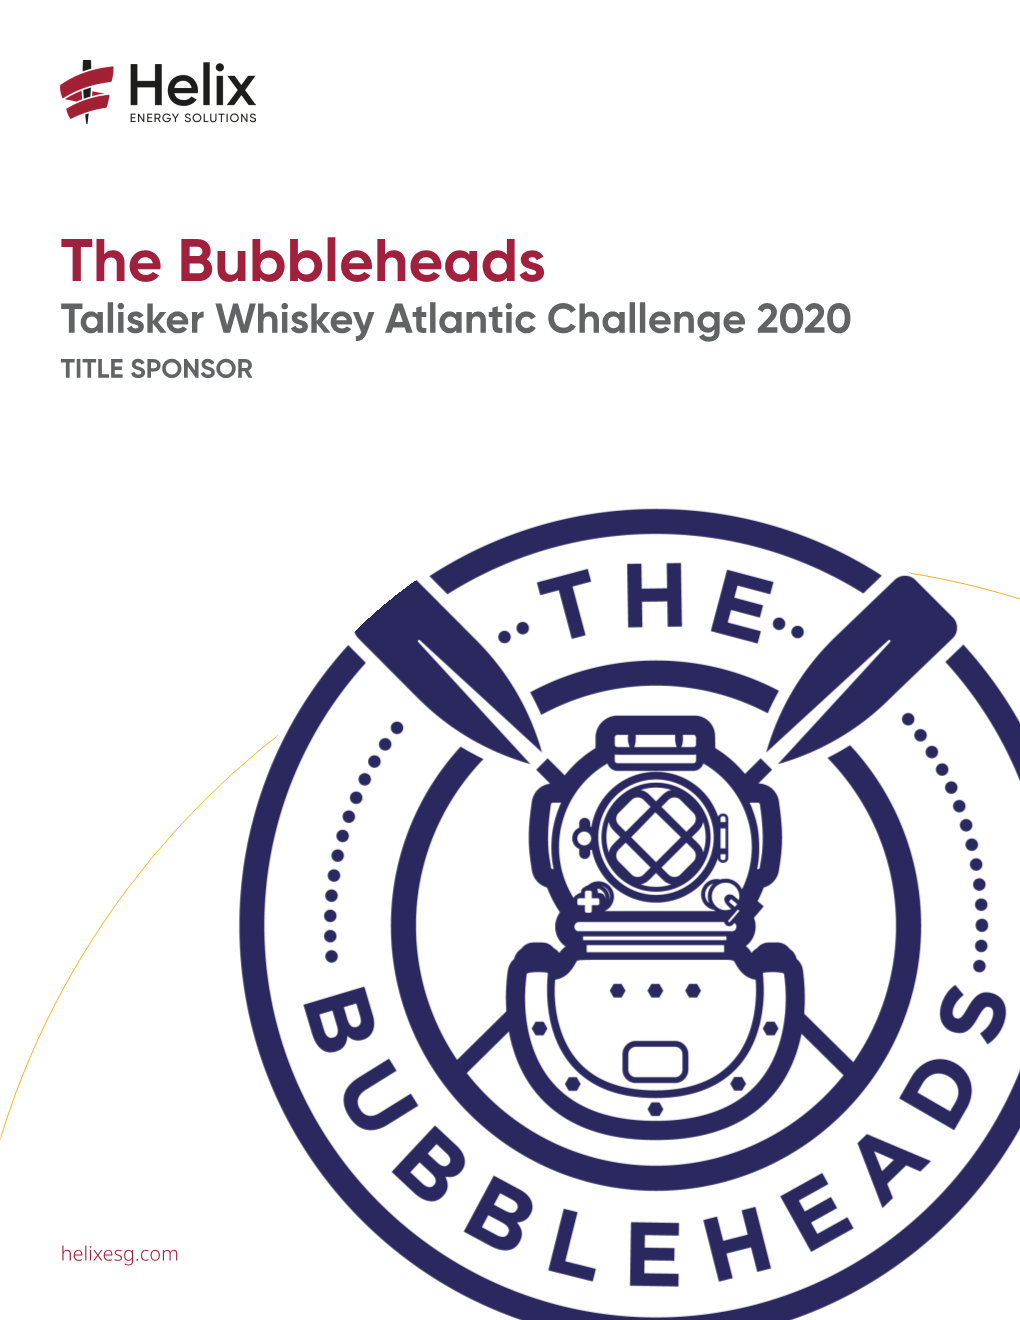 The Bubbleheads Talisker Whiskey Atlantic Challenge 2020 TITLE SPONSOR